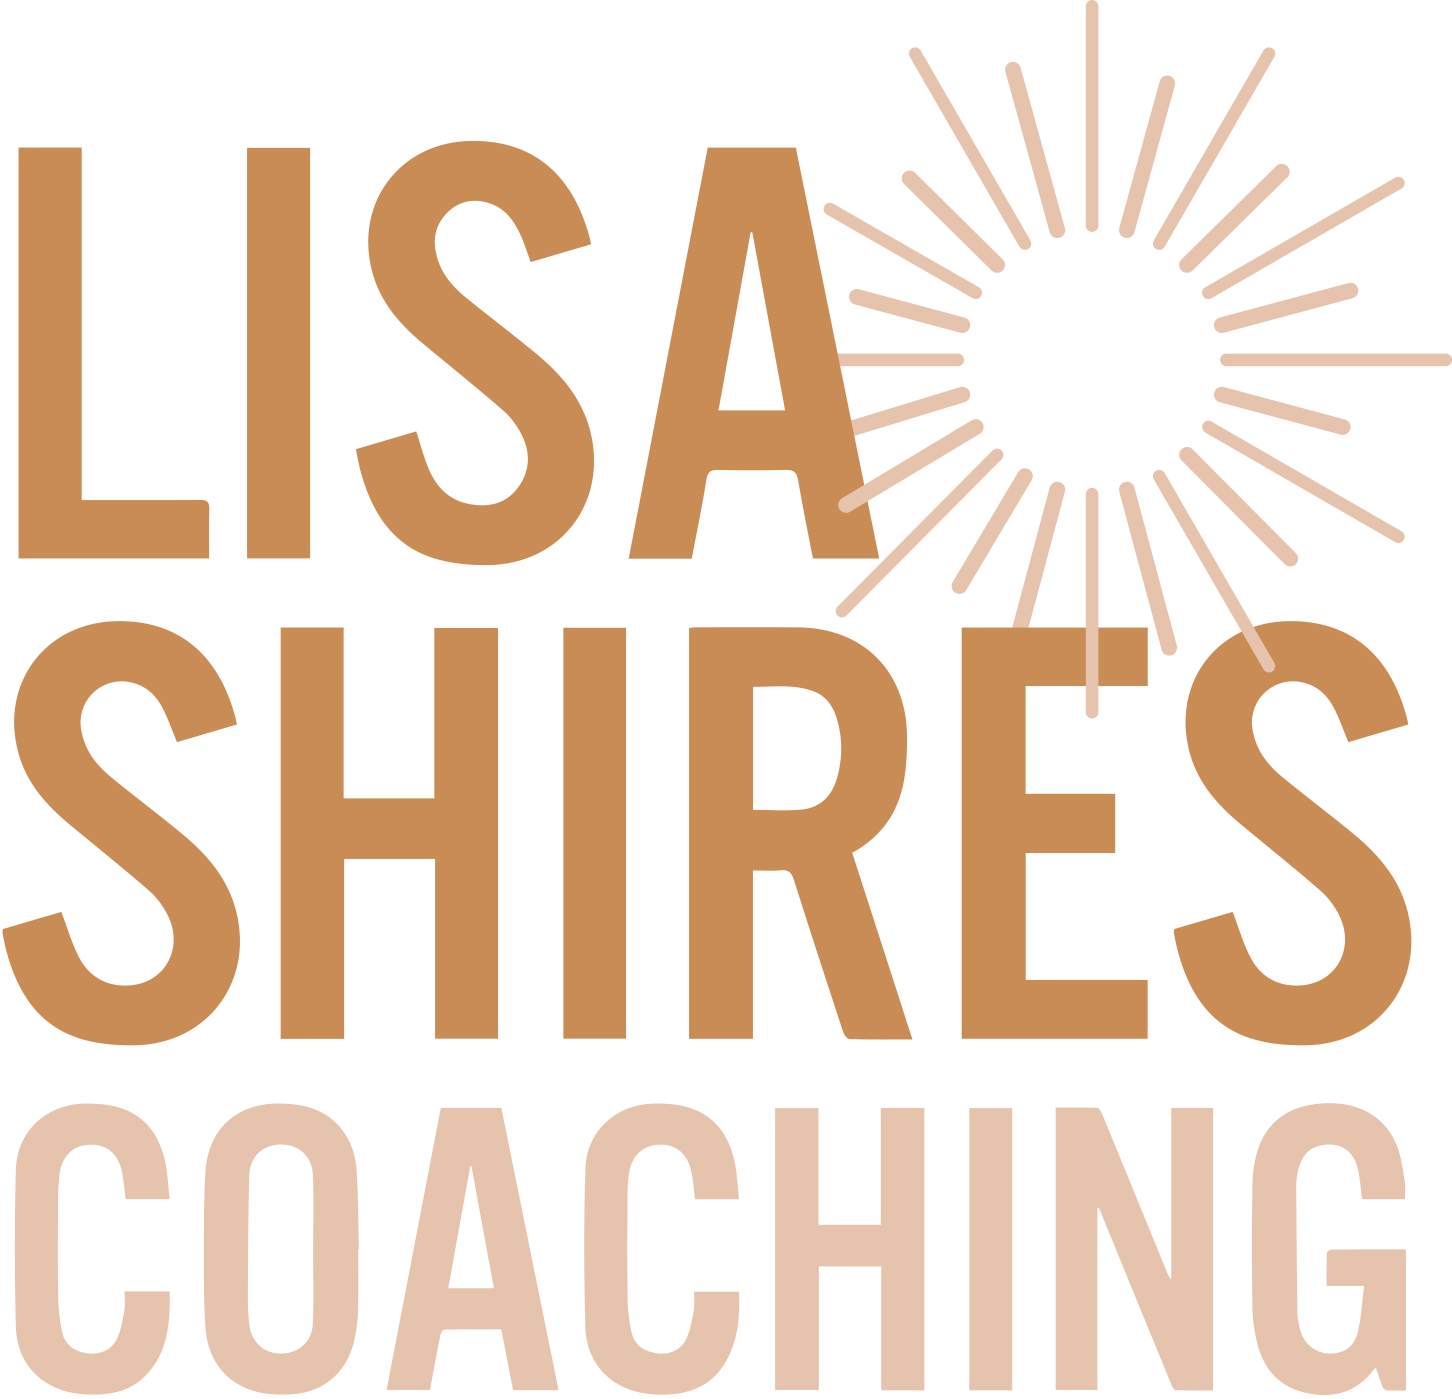 Lisa Shires Coaching